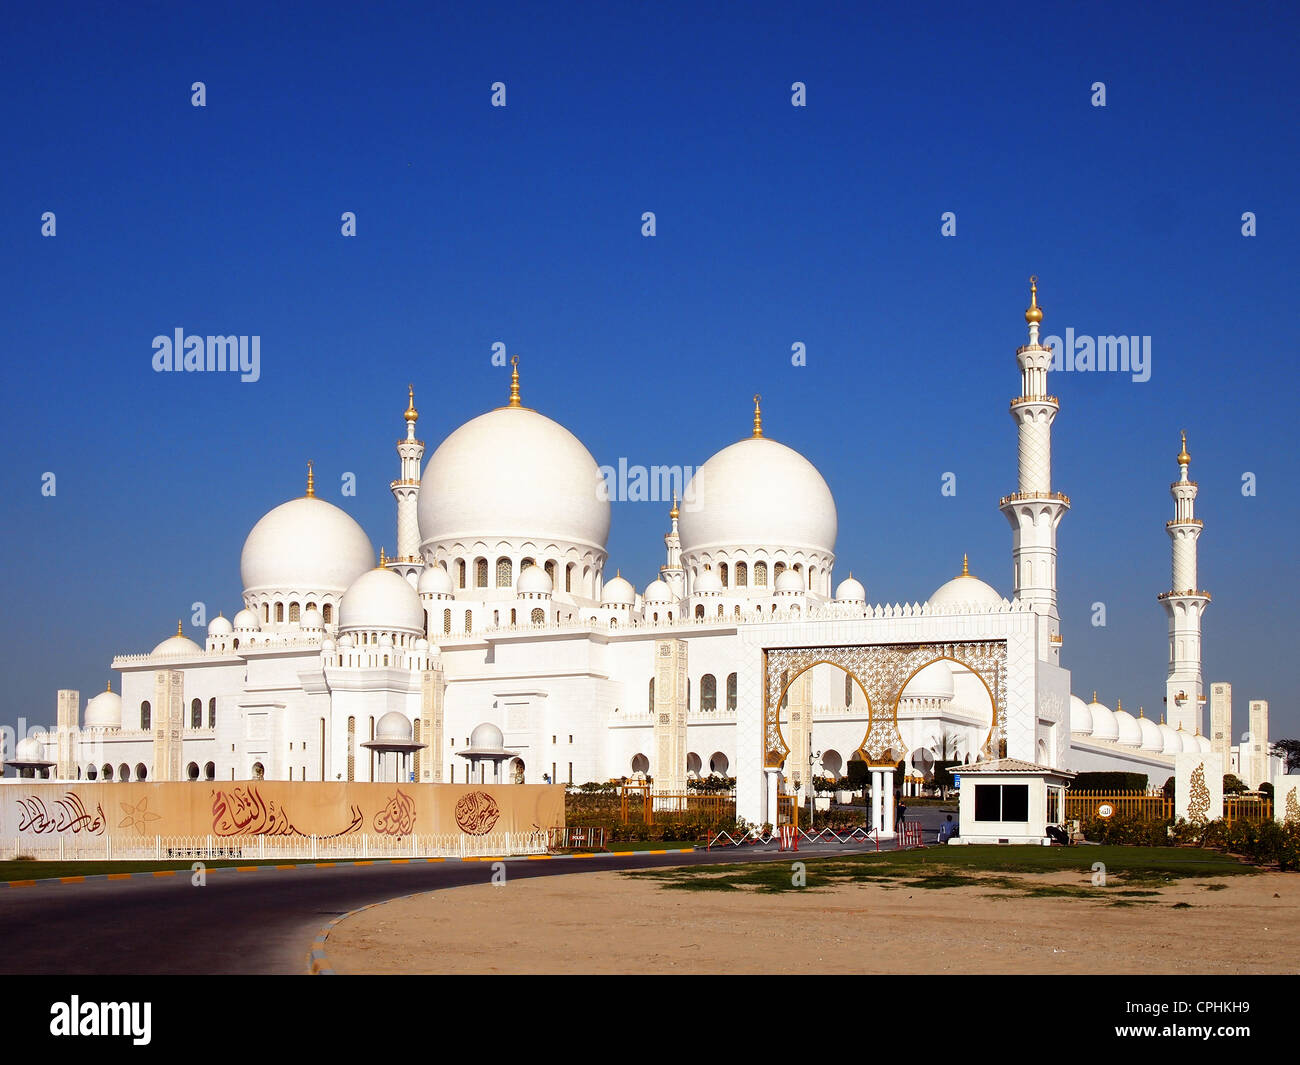 Sheikh Zayed Grande Moschea di Abu Dhabi, Emirato di Abu Dhabi, Emirati arabi uniti, punto di riferimento Foto Stock